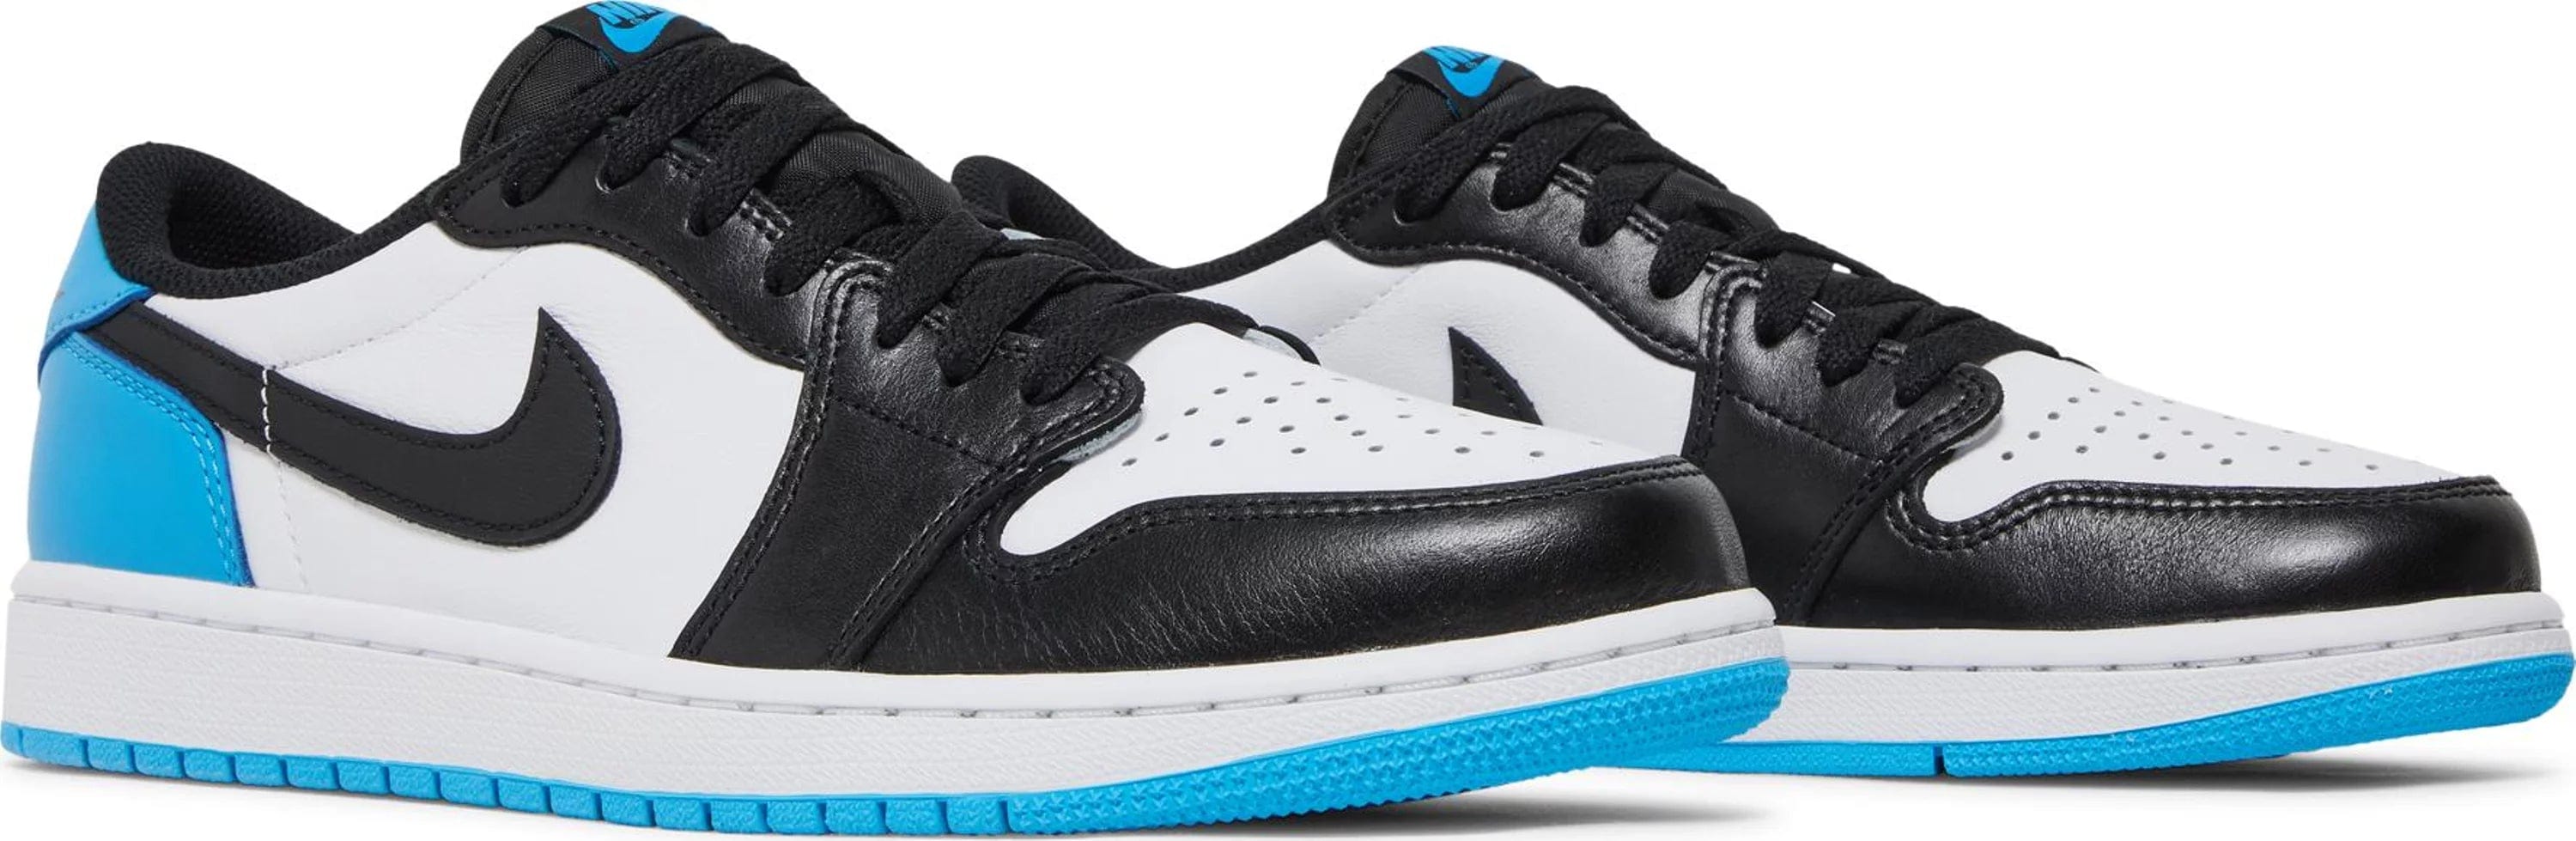 Nike Air Jordan 1 Retro Low OG Black Dark Powder Blue Men's